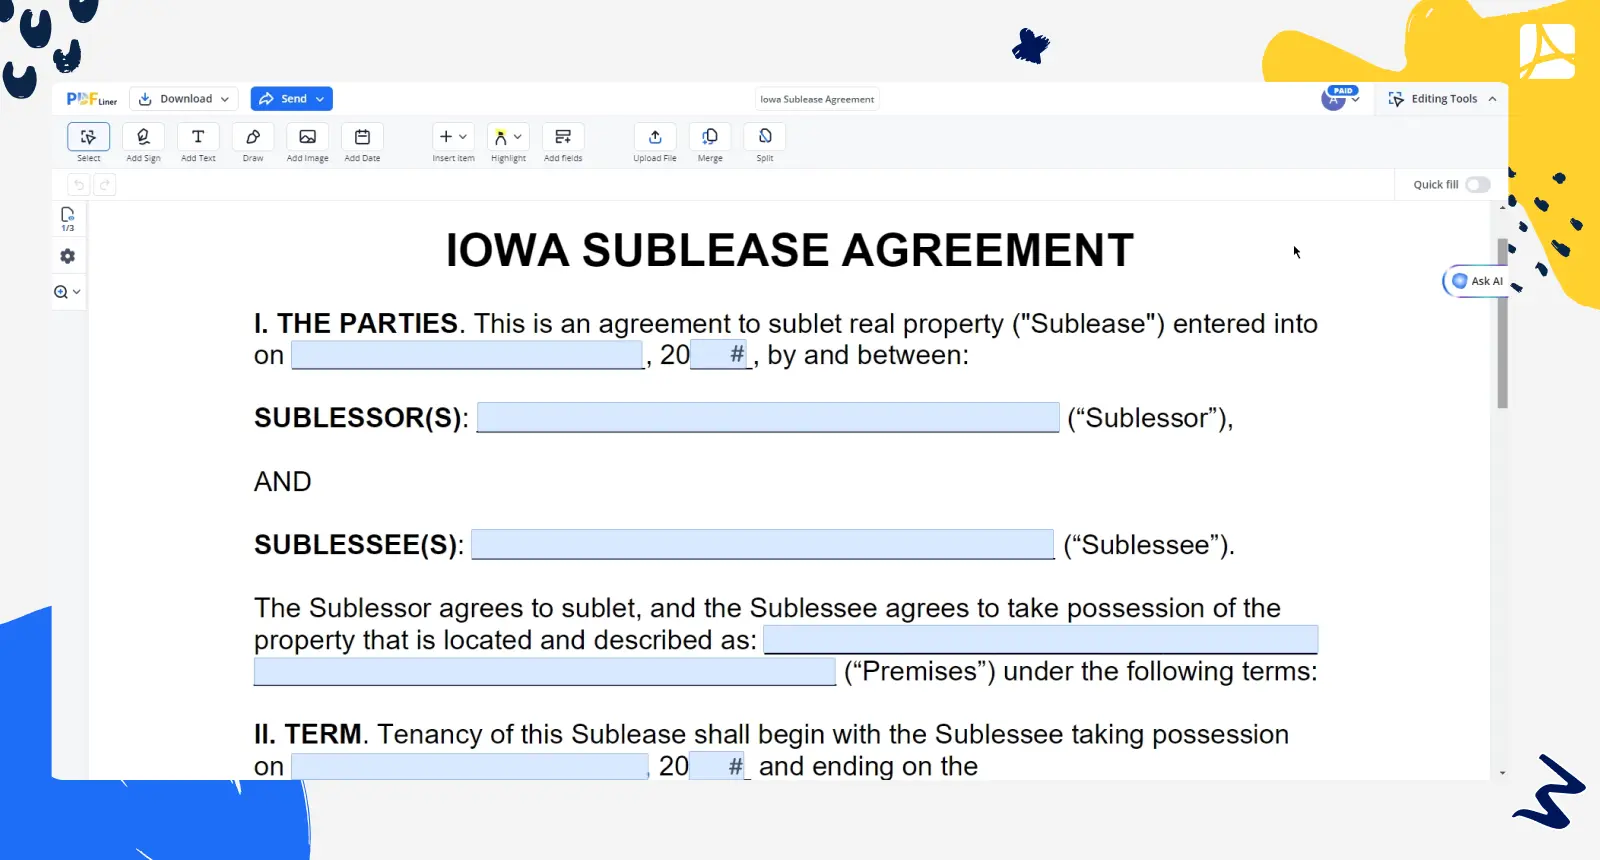 Iowa Sublease Agreement PDFLiner screenshot